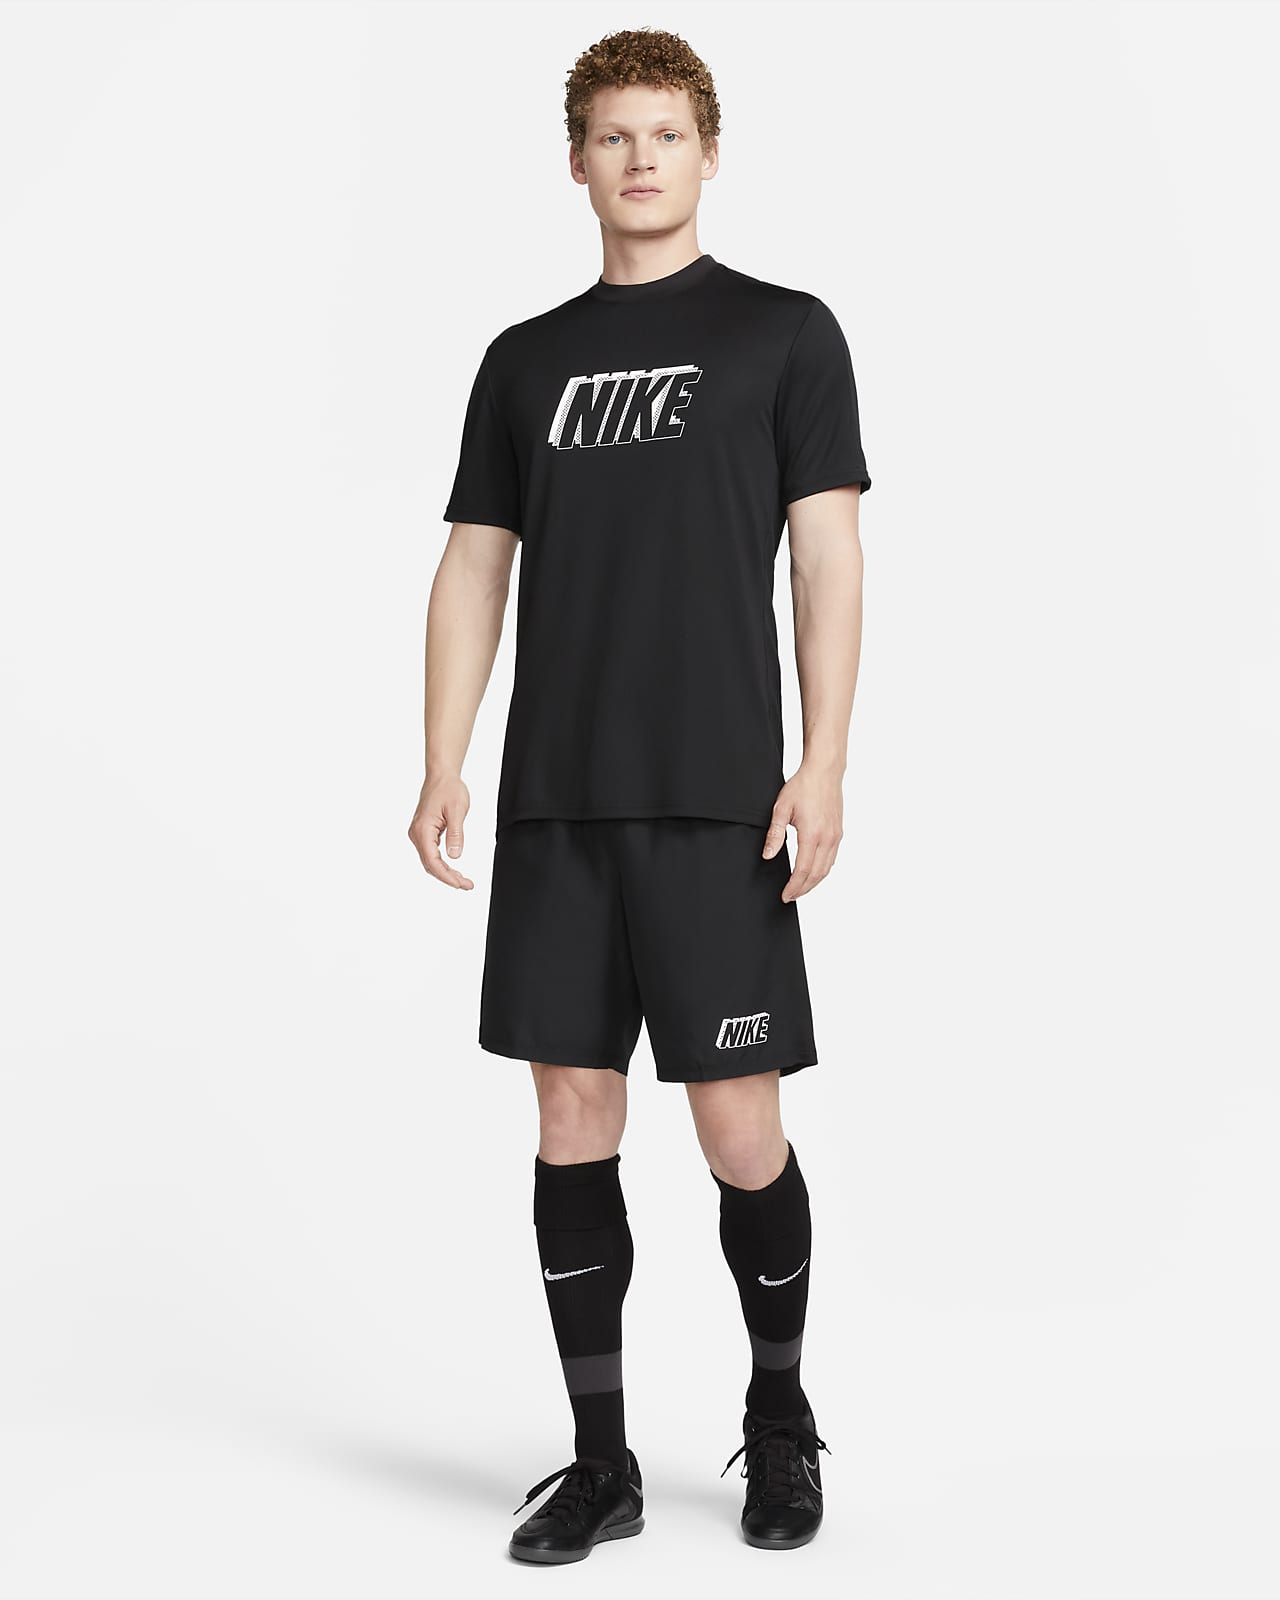 Nike Men's Short-Sleeve Global Football Top. Nike.com